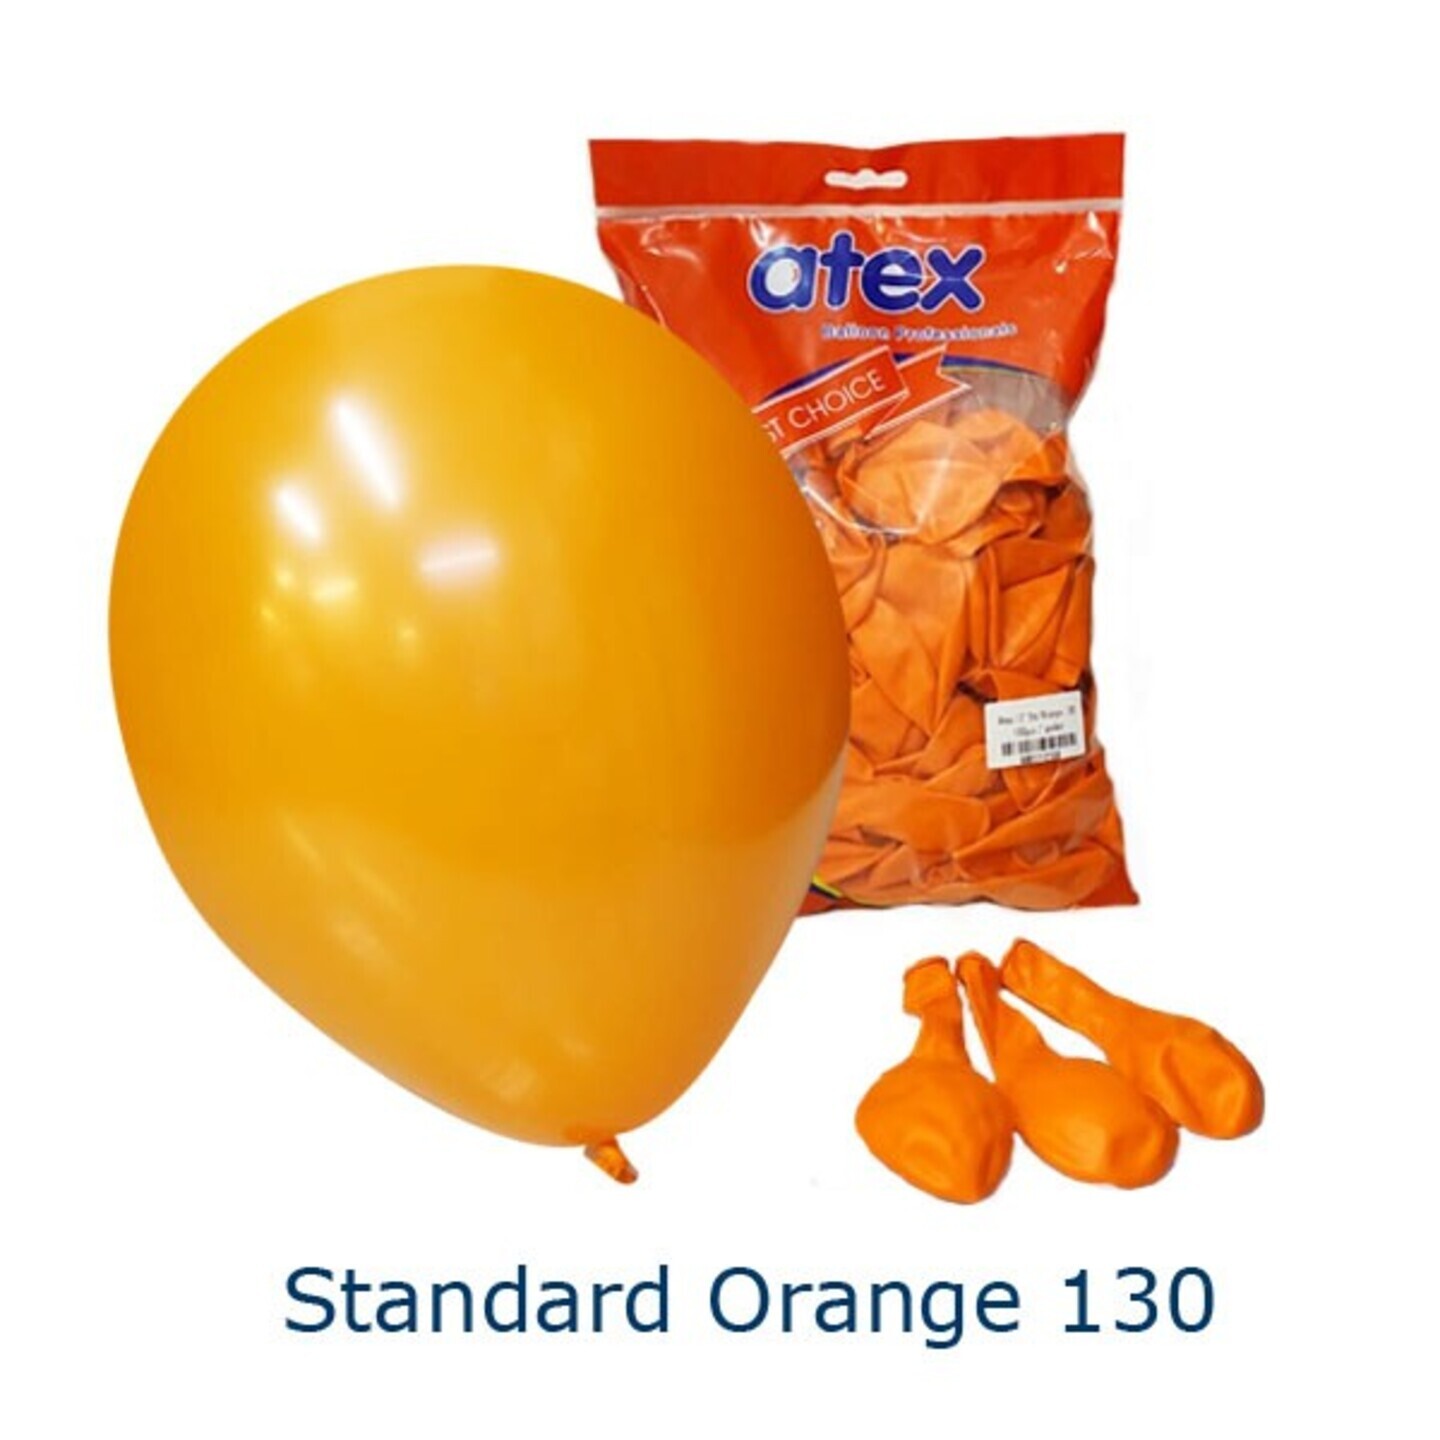 Standard Orange 130